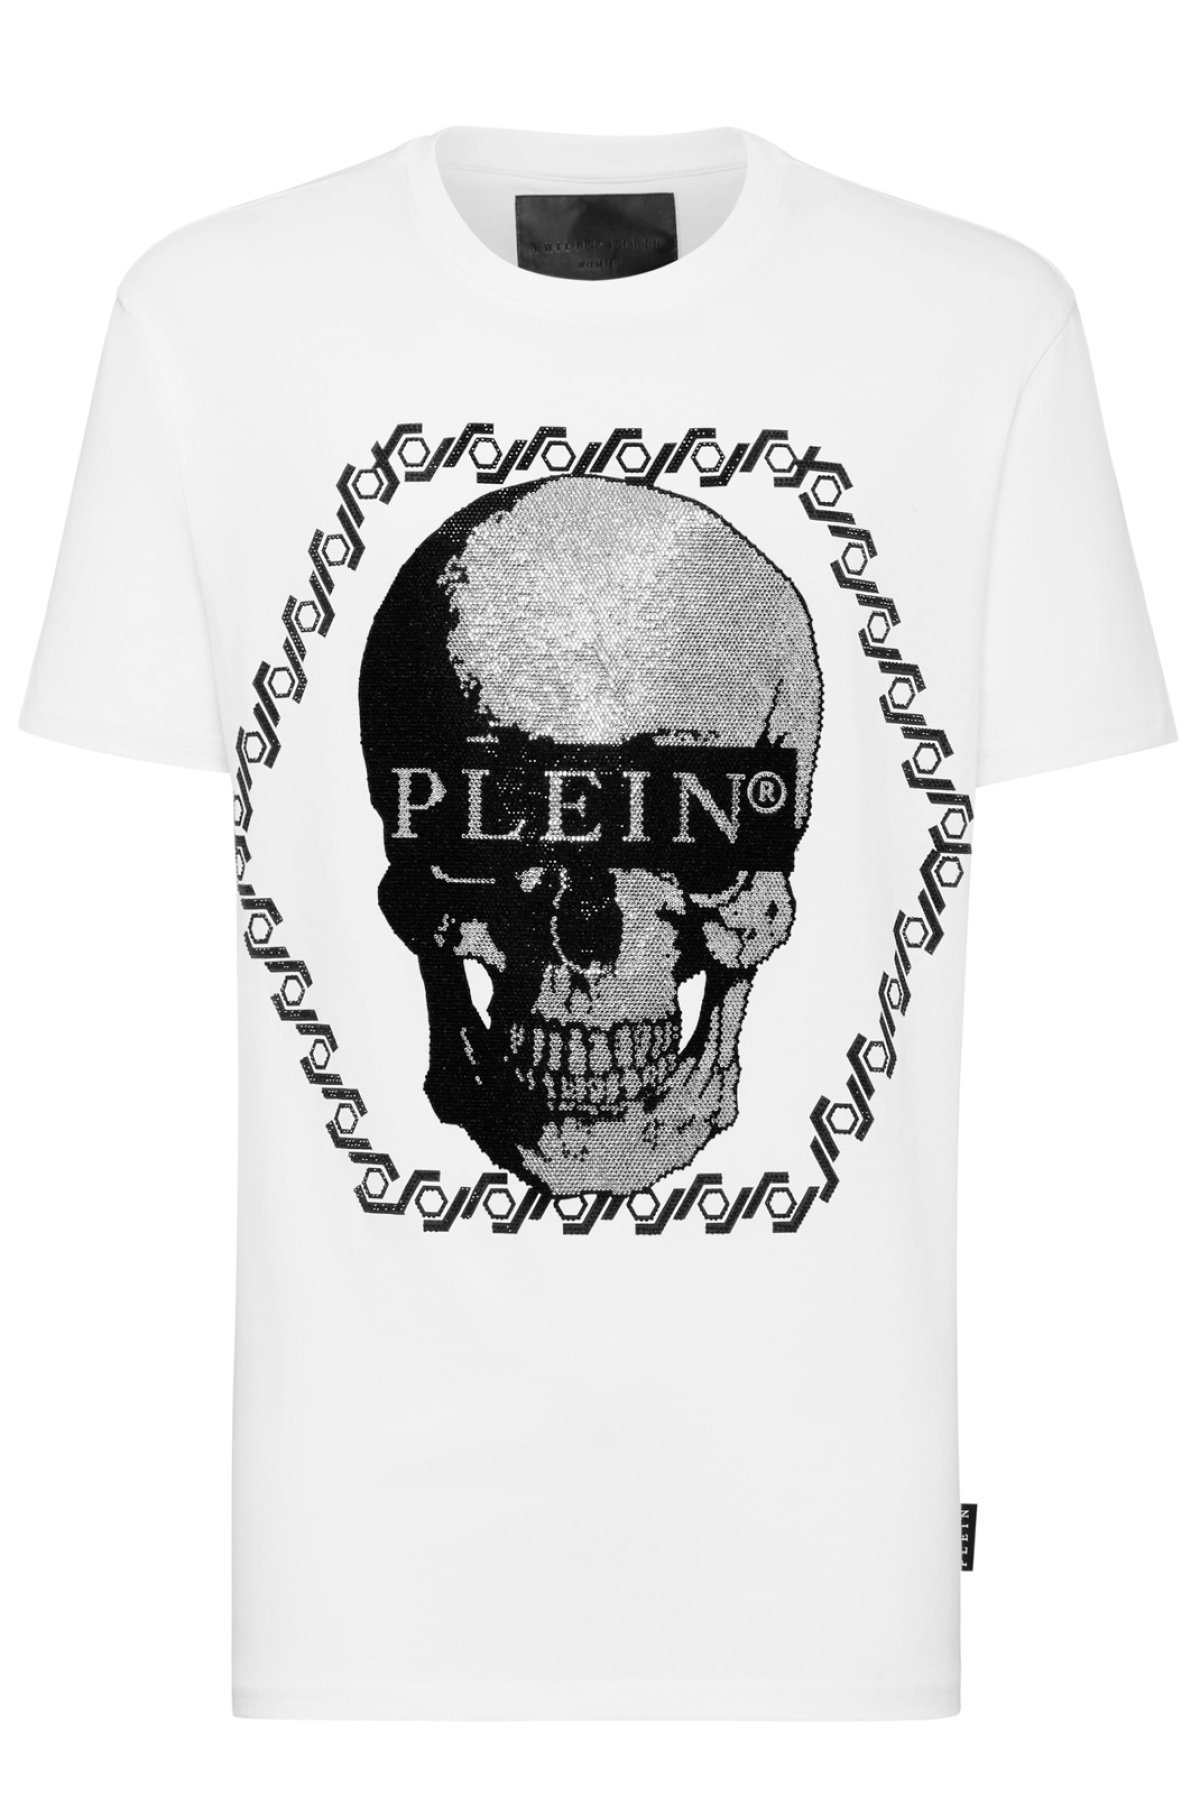 Philipp Plein MTK5150 PJY002N tričko bílé